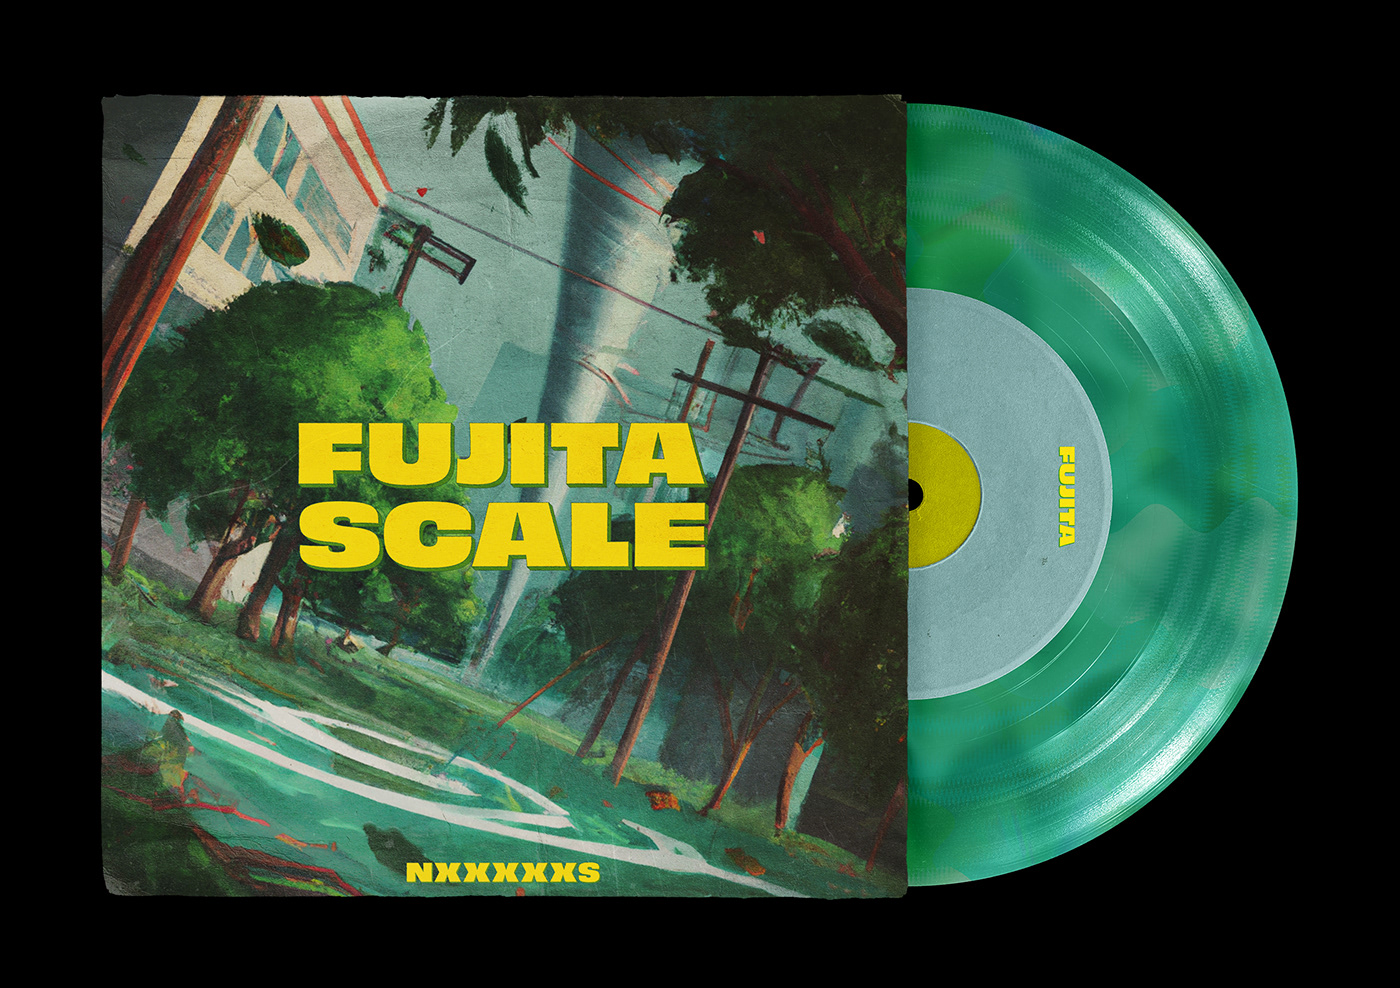 NXXXXXS - “Fujita Scale” - Record Sleeve and Vinyl